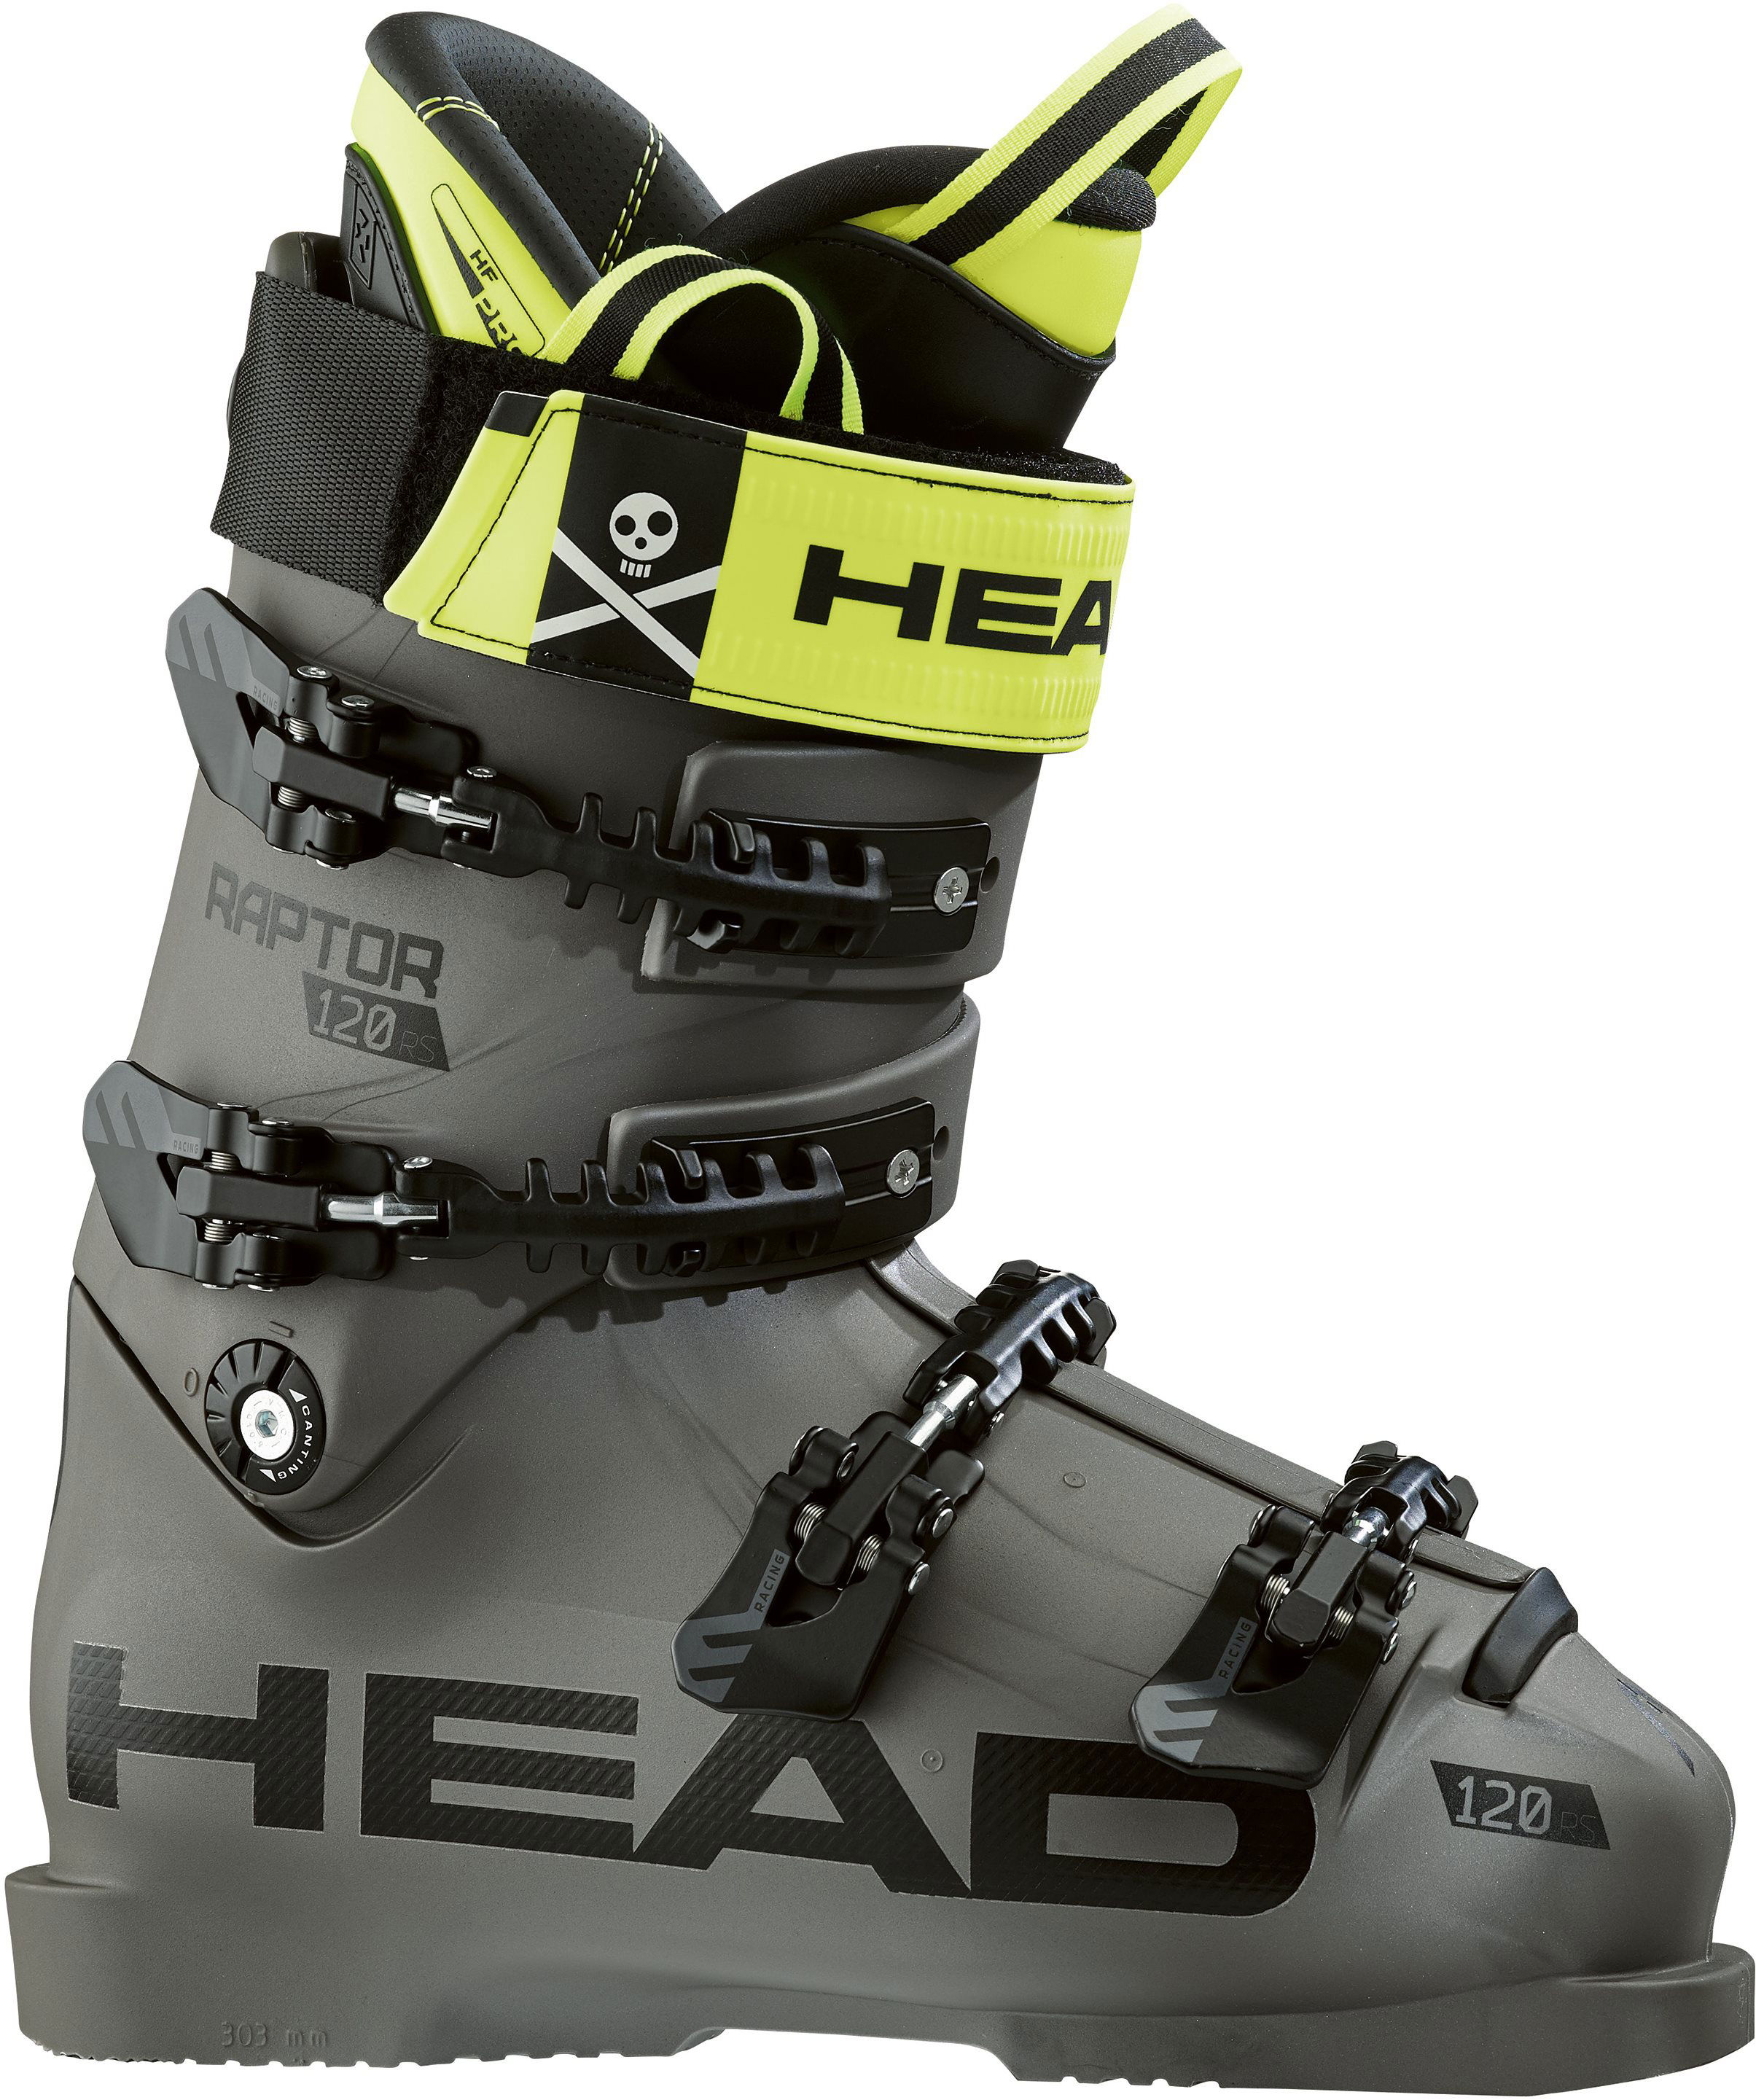 HEAD RAPTER 120S RS 27-27.5cm - スキー